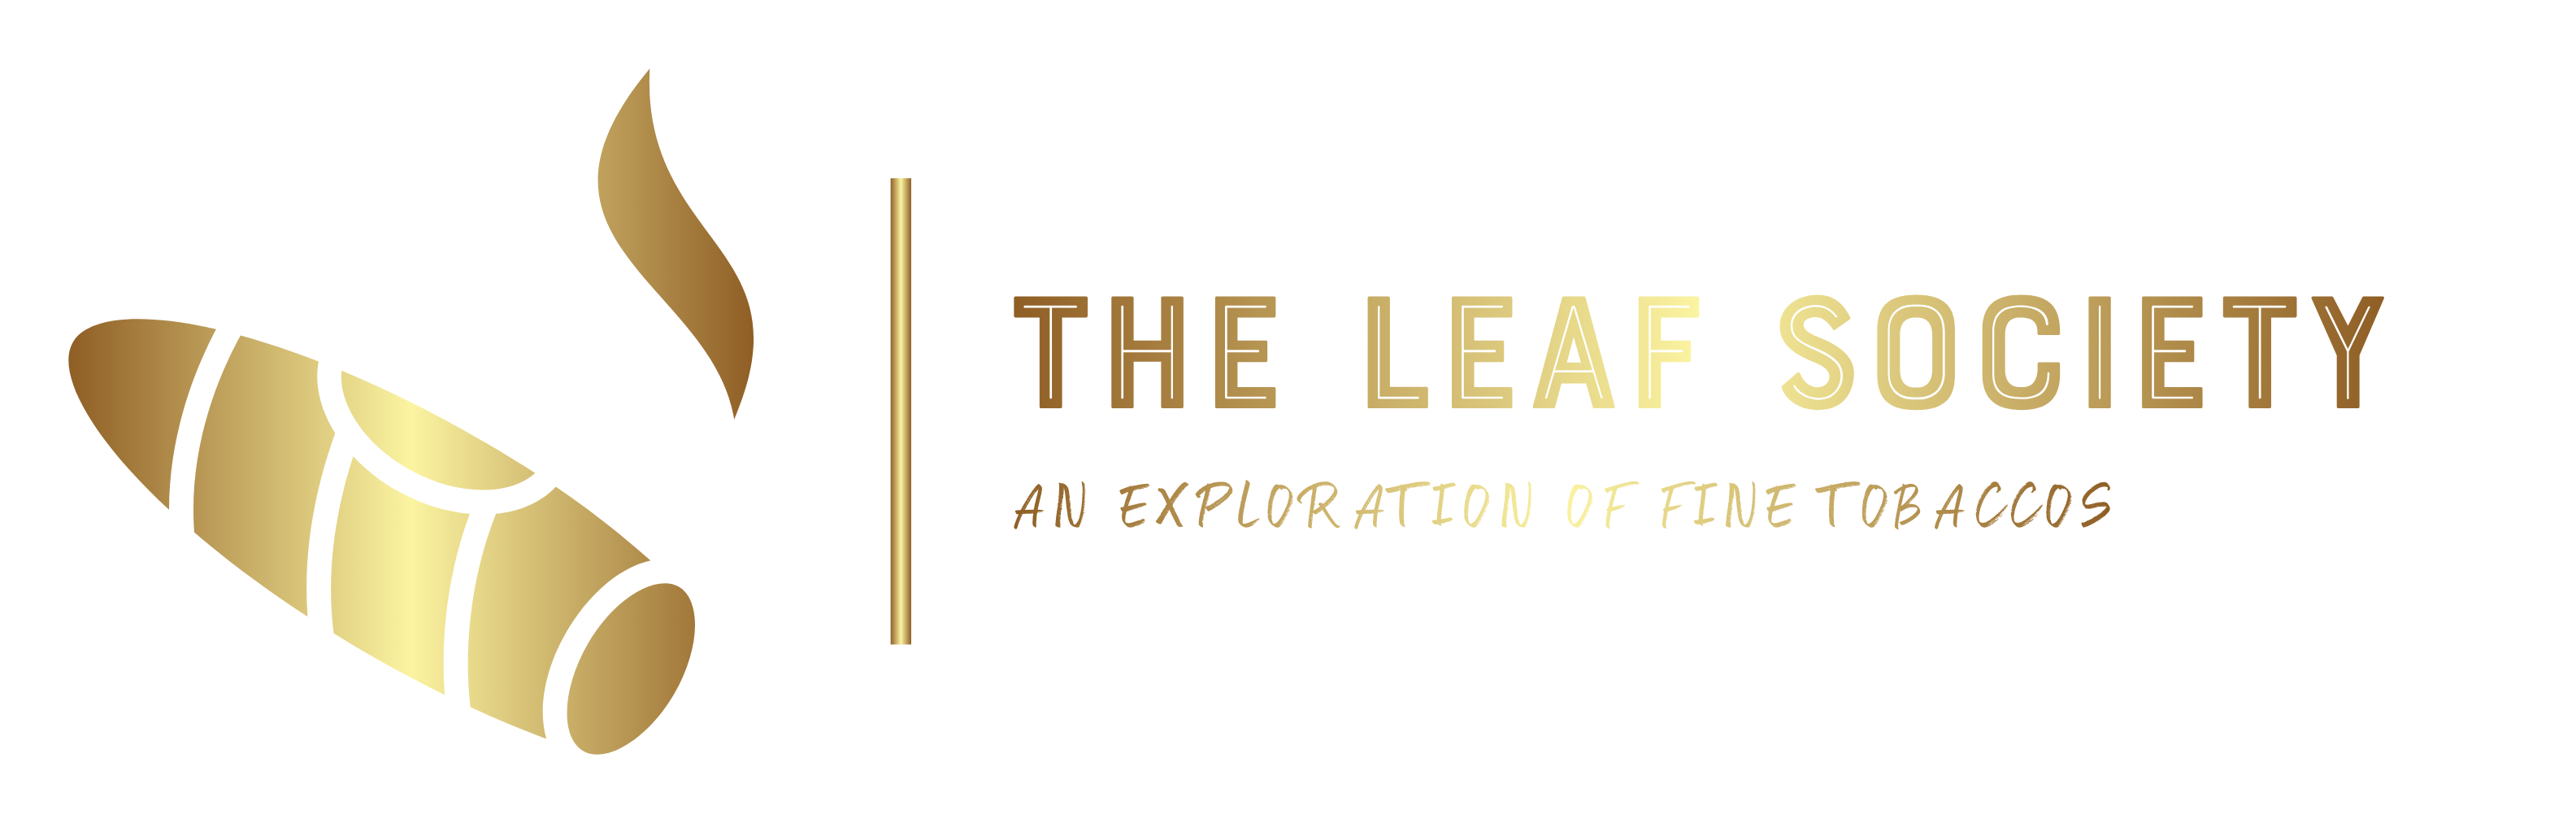 The Leaf Society